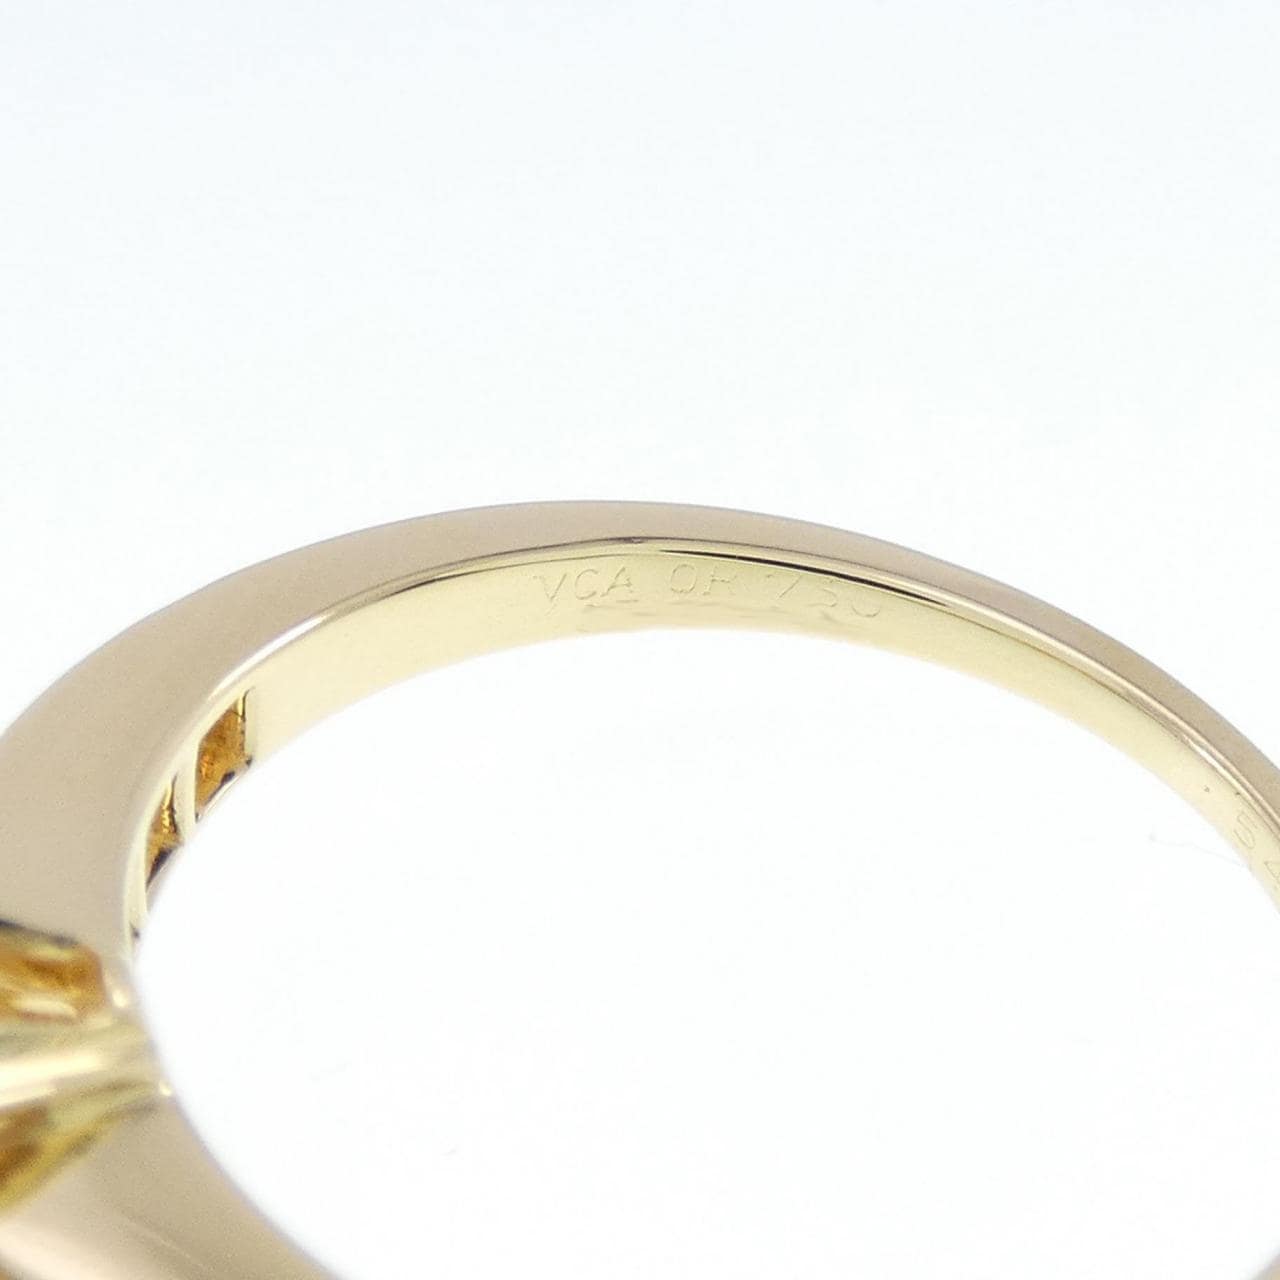 Van Cleef & Arpels Fleurette Small Ring